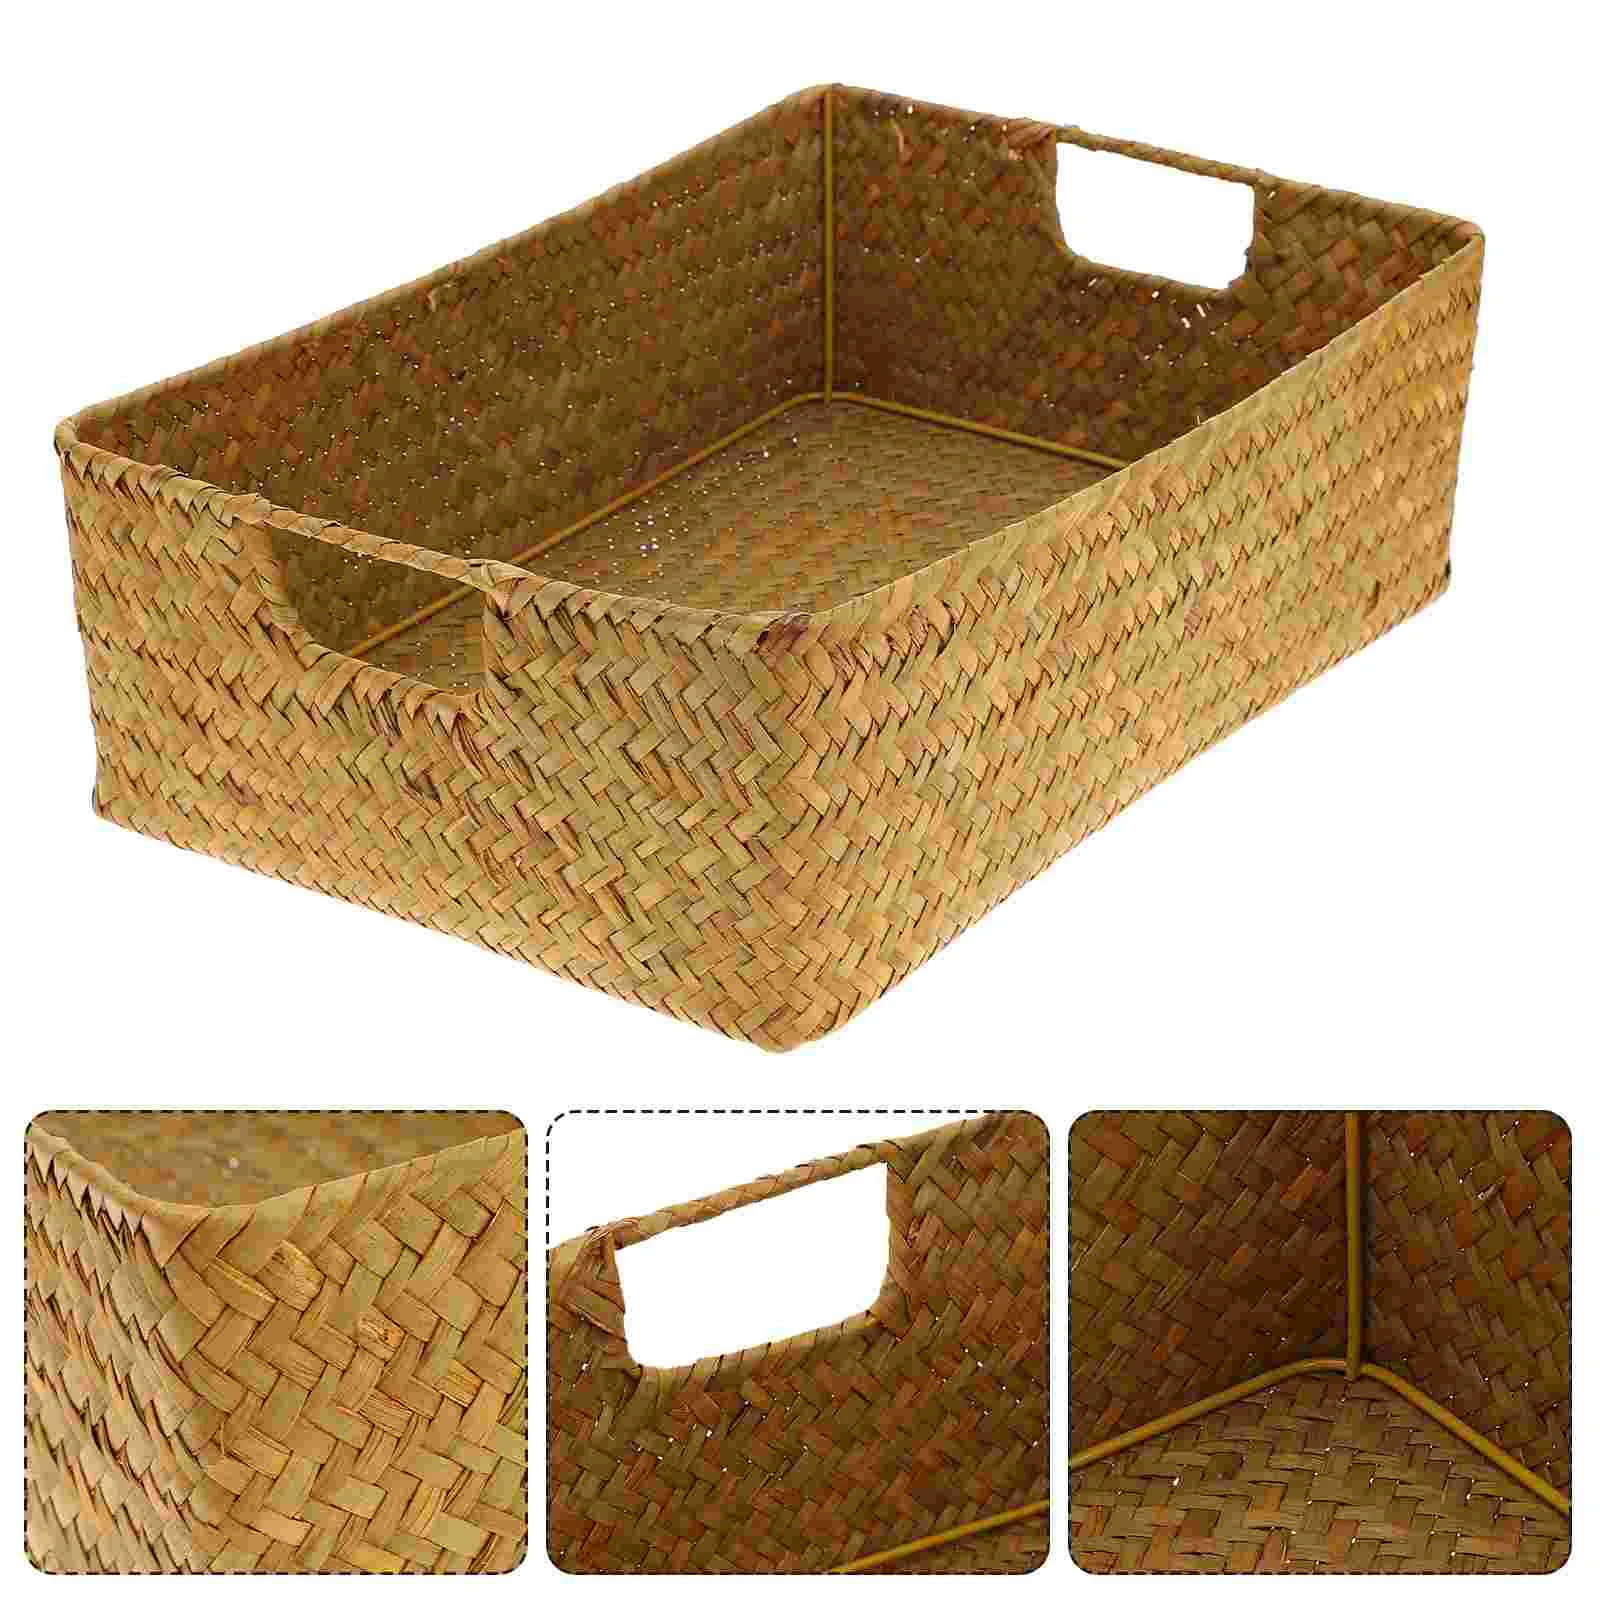 

Basket Storage Baskets Wicker Woven Seagrassrattan Organizerfruit Bins Bin Hamper Rectangular Large Seaweed Laundry Serving